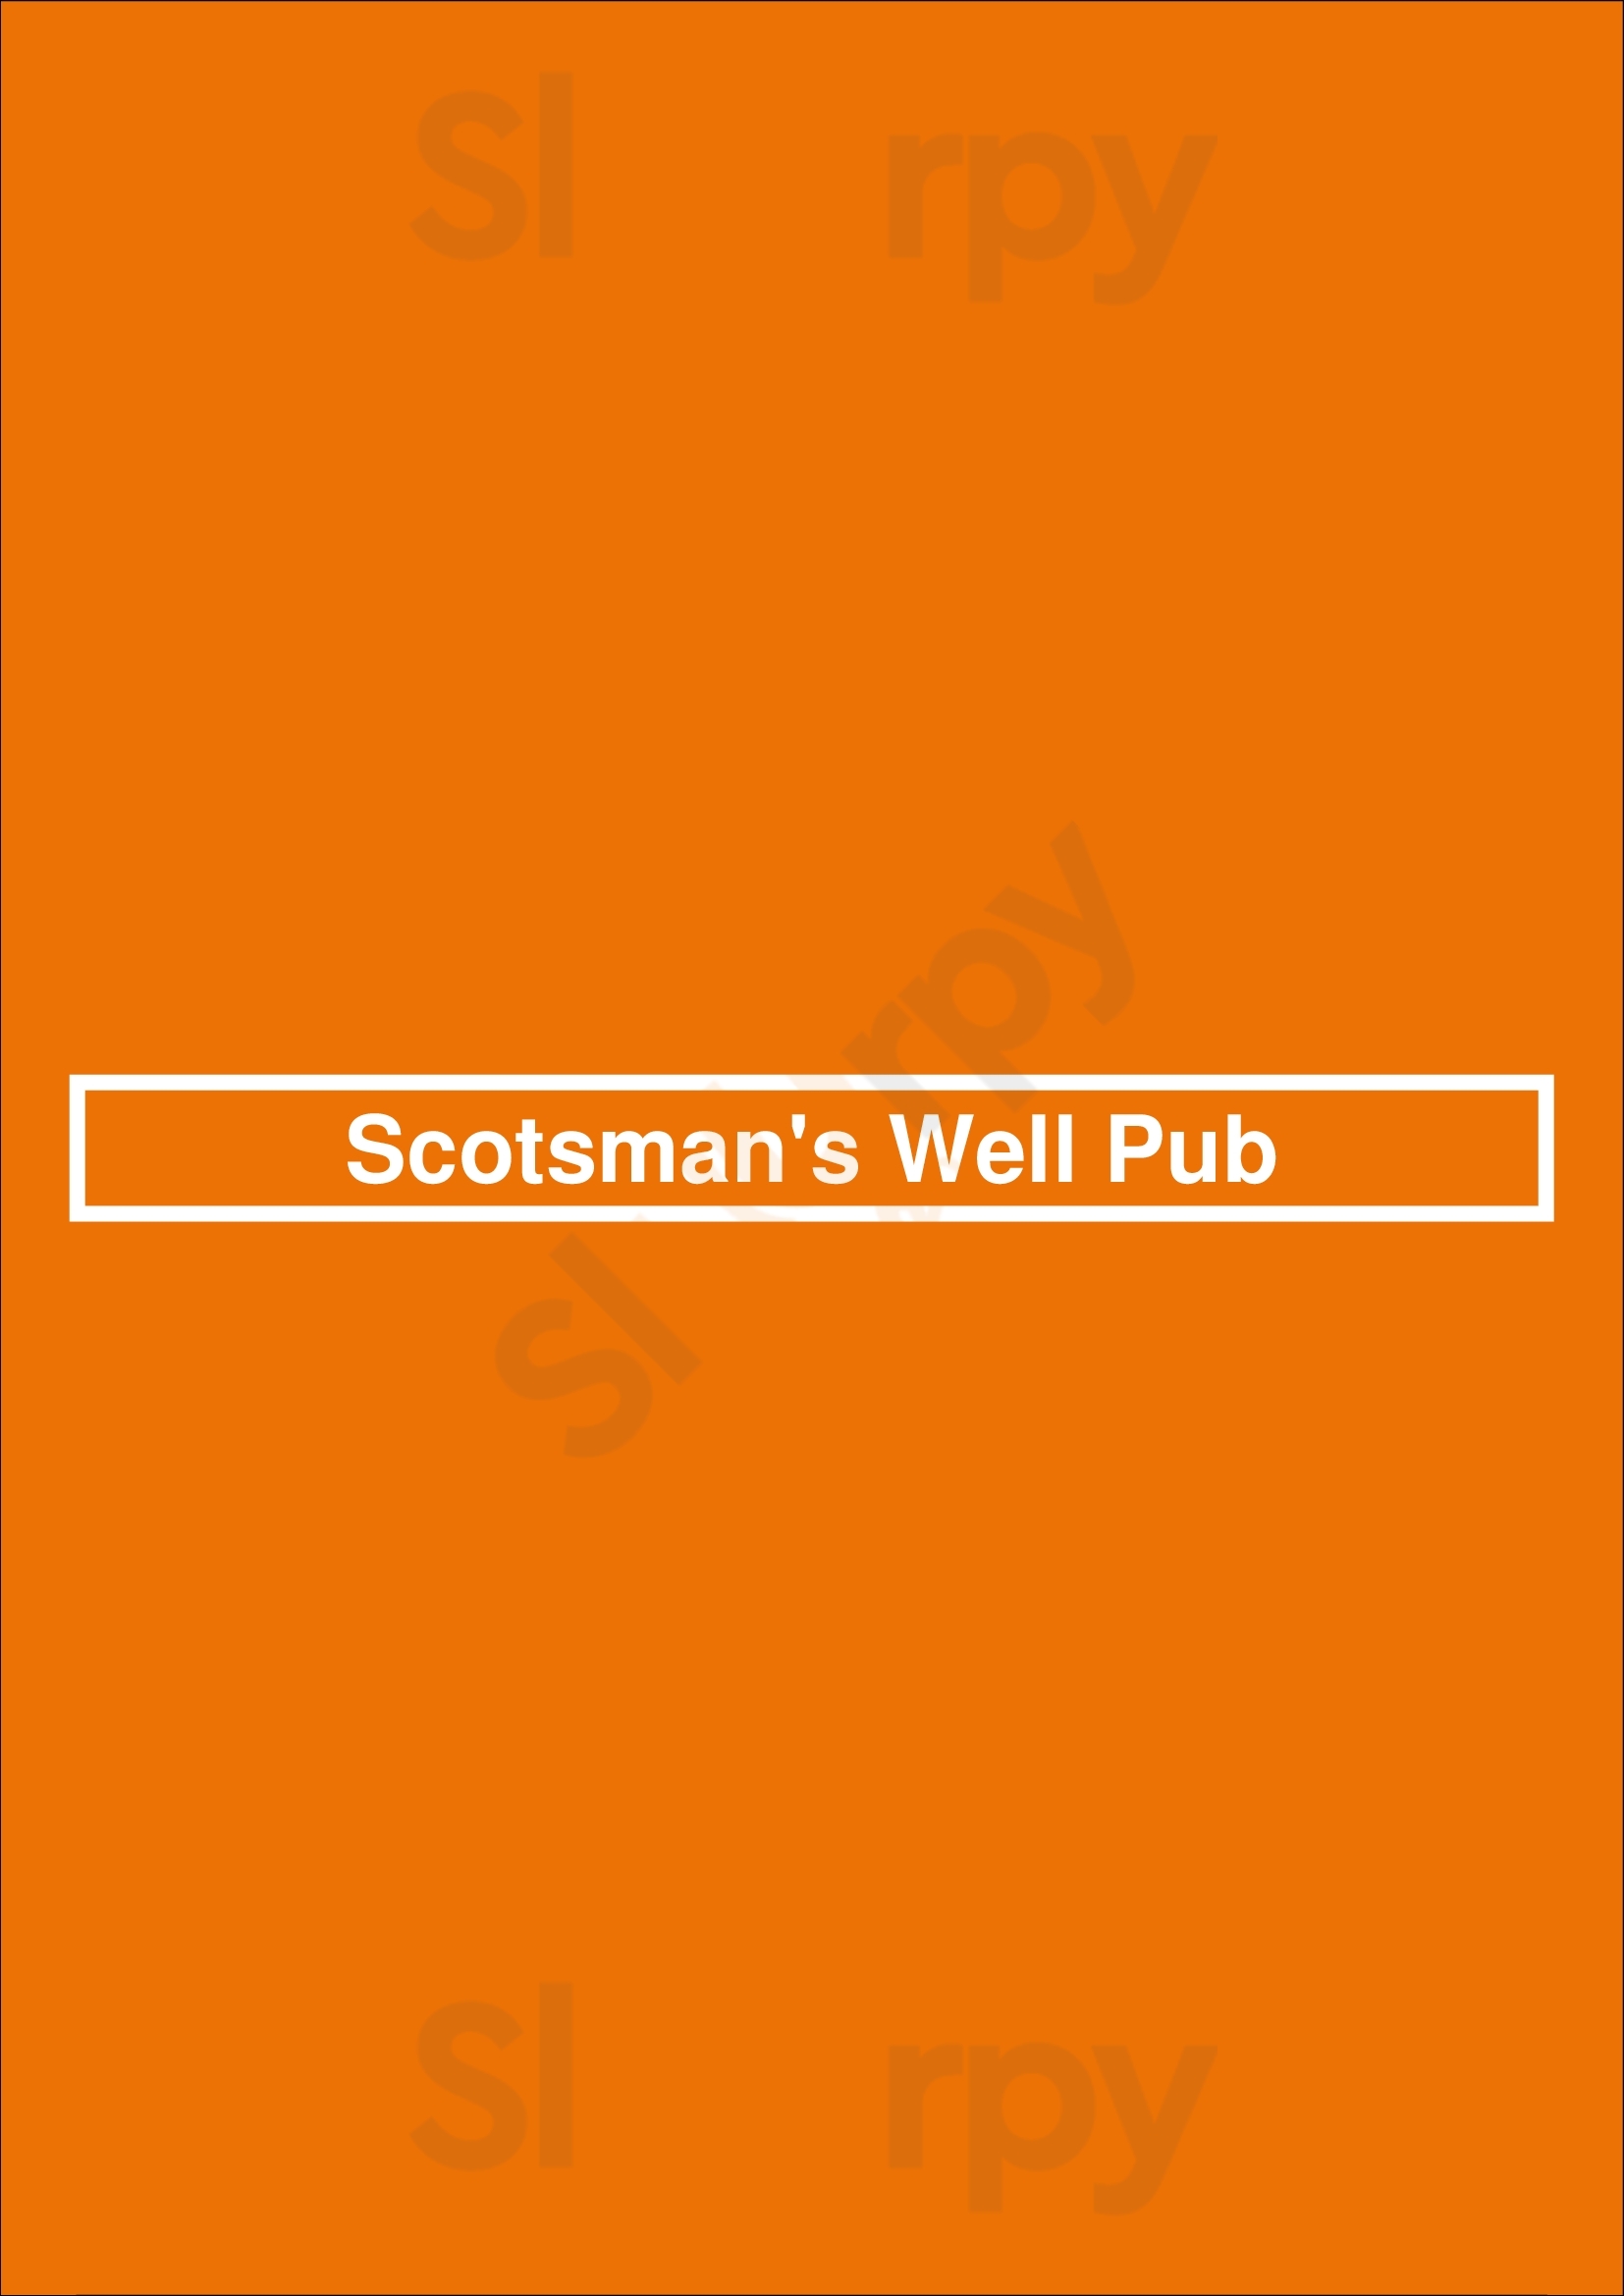 Scotsman's Well Pub Calgary Menu - 1